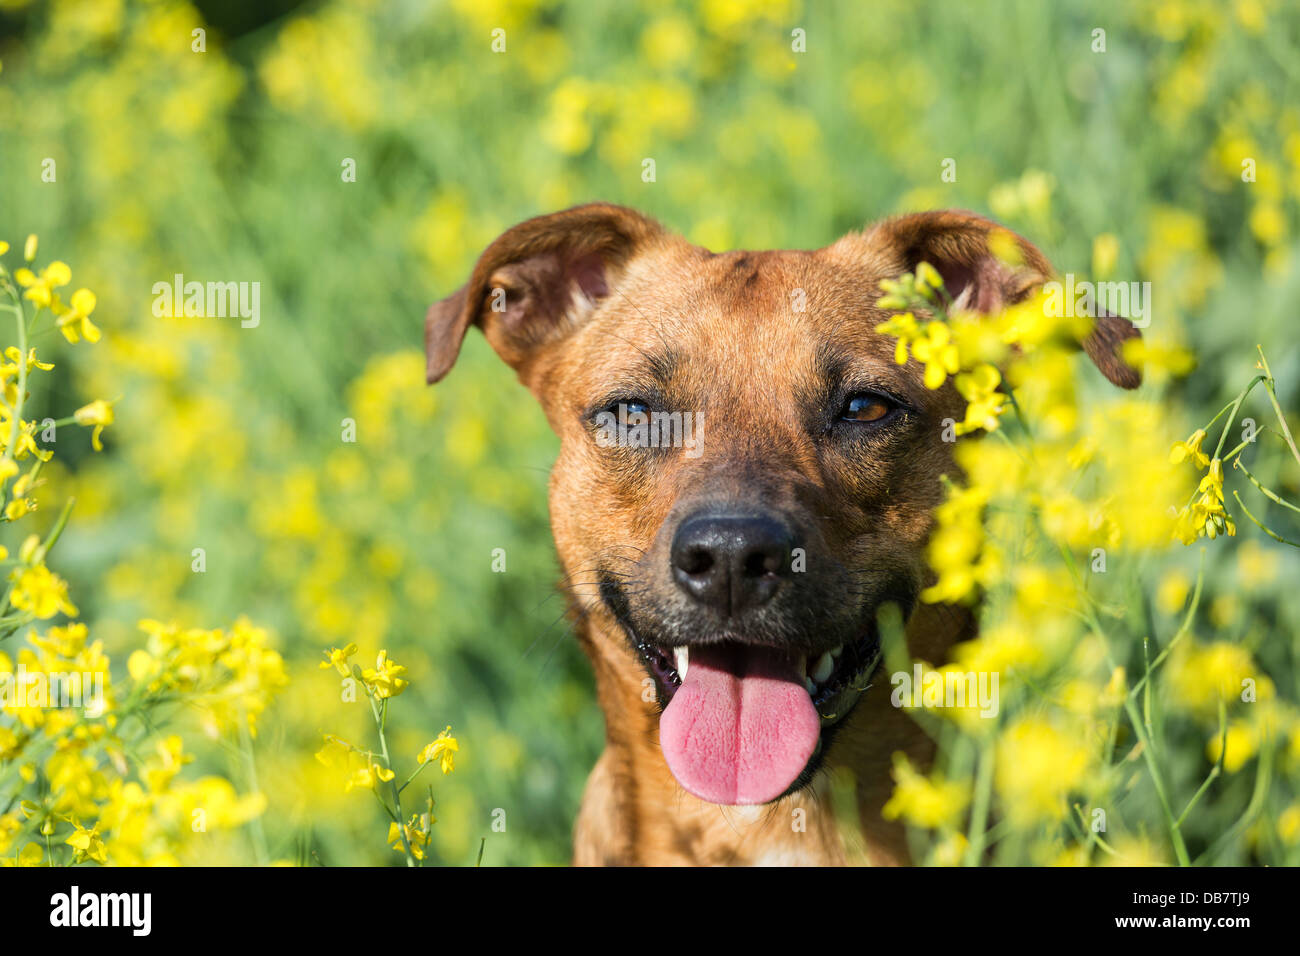 Small dog happy in the canola. Stock Photo